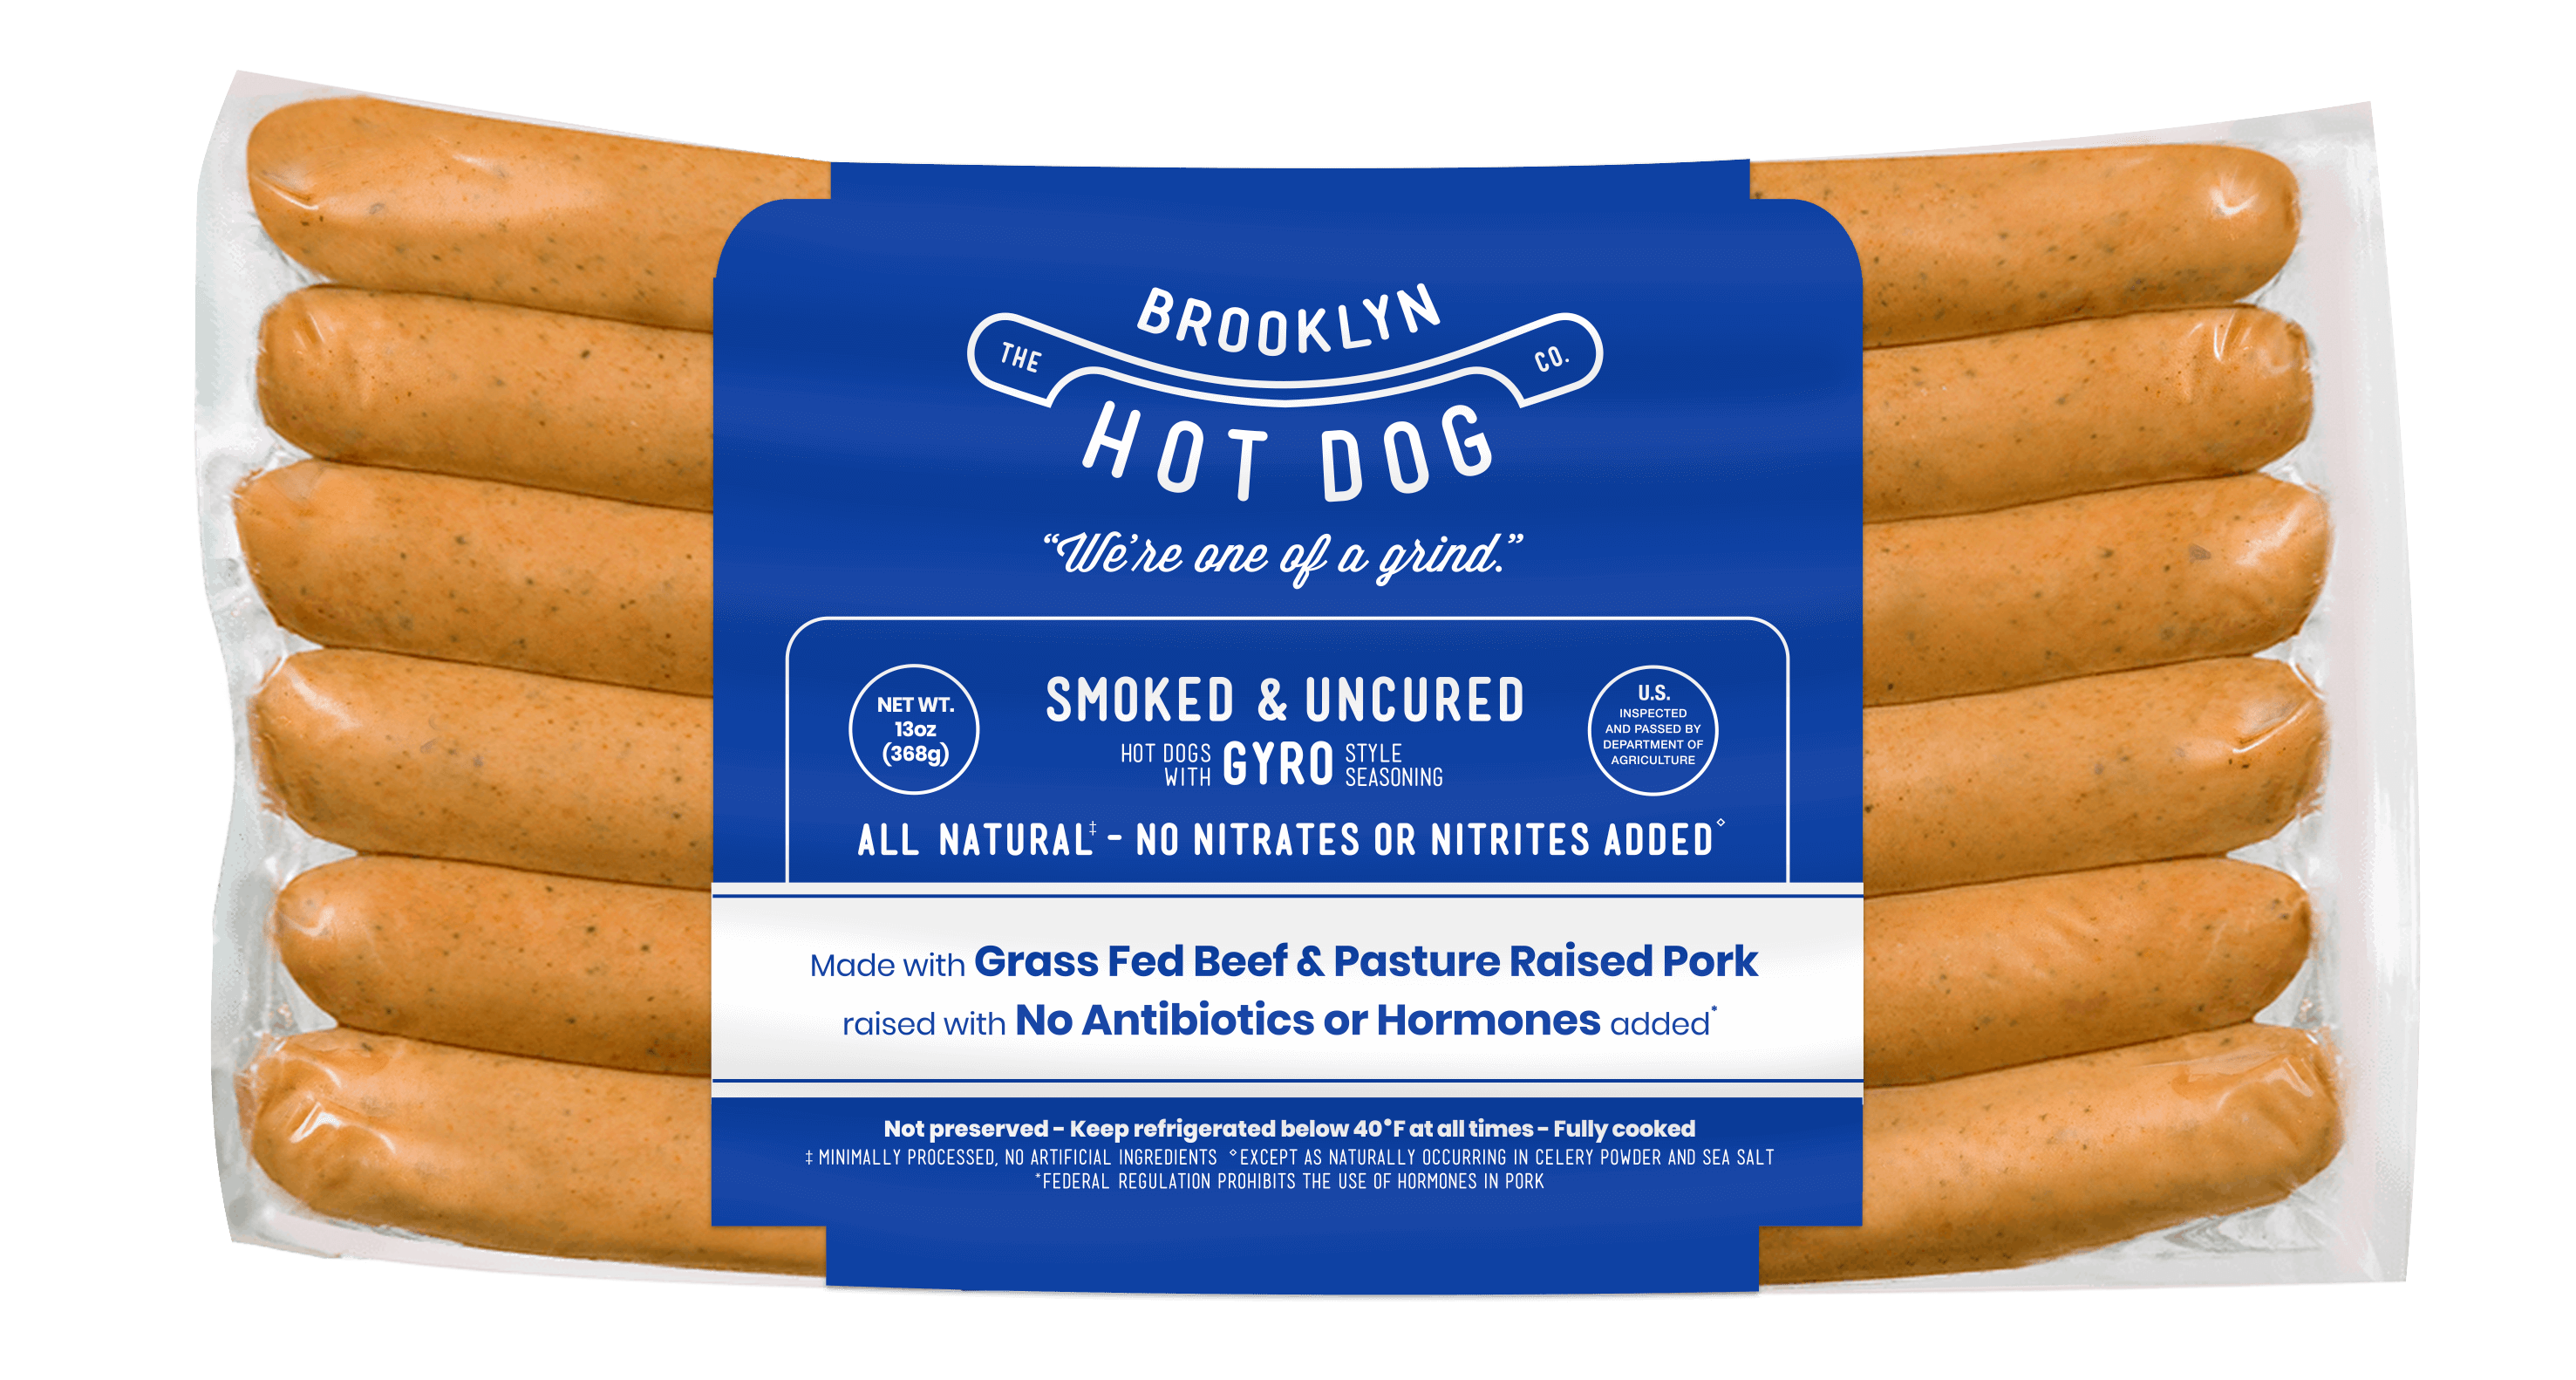 Gyro Dog – The Brooklyn Hot Dog Company